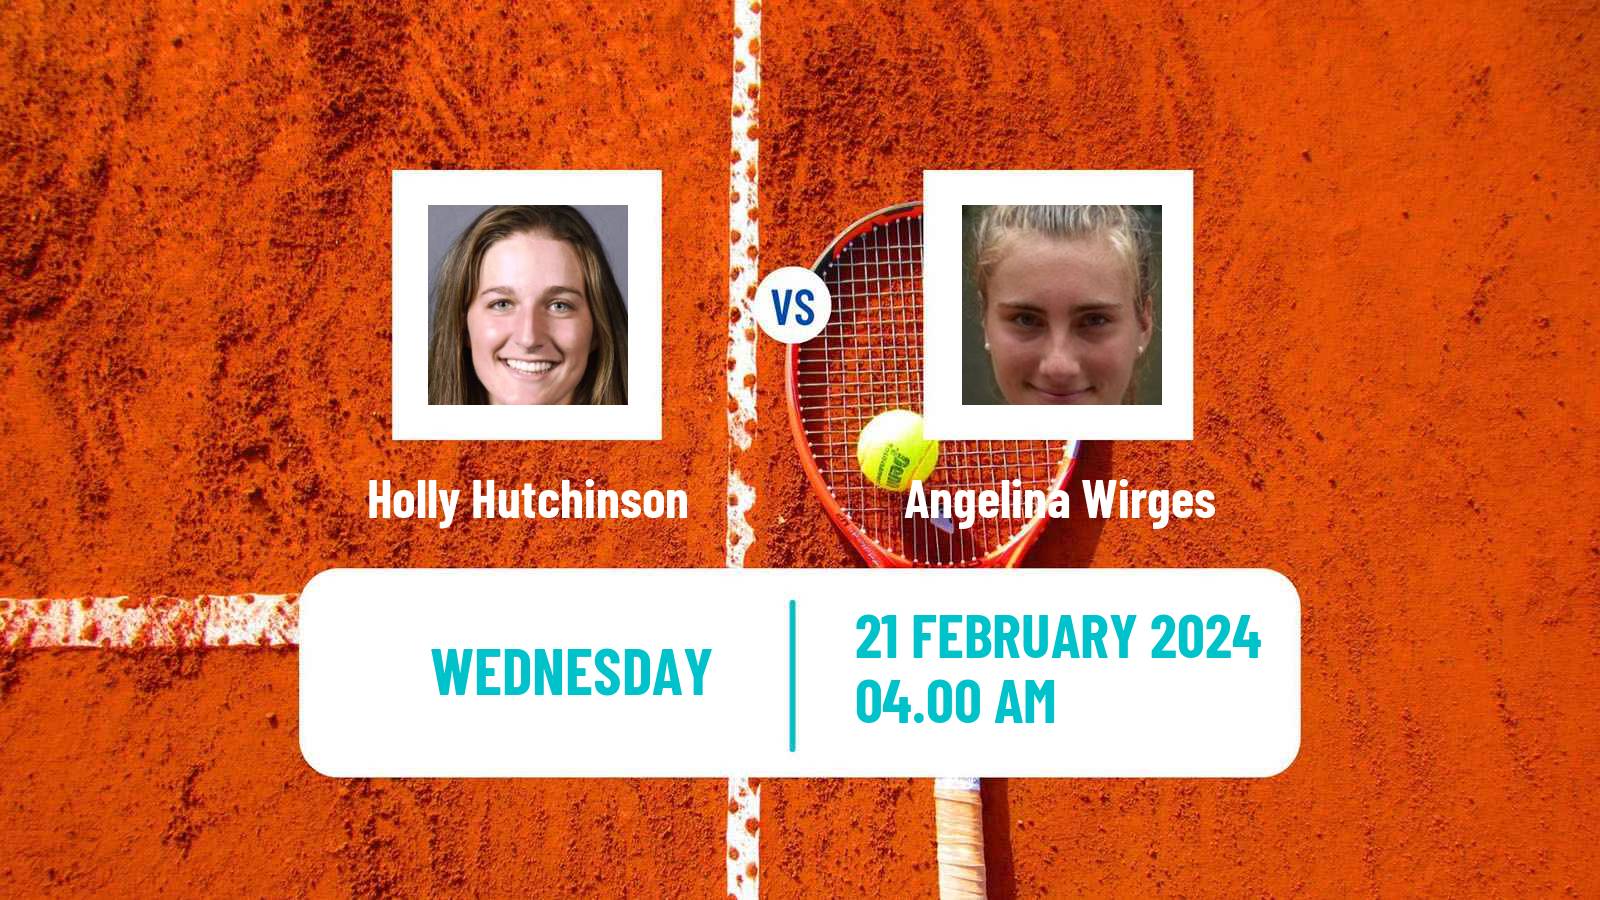 Tennis ITF W15 Manacor 2 Women Holly Hutchinson - Angelina Wirges